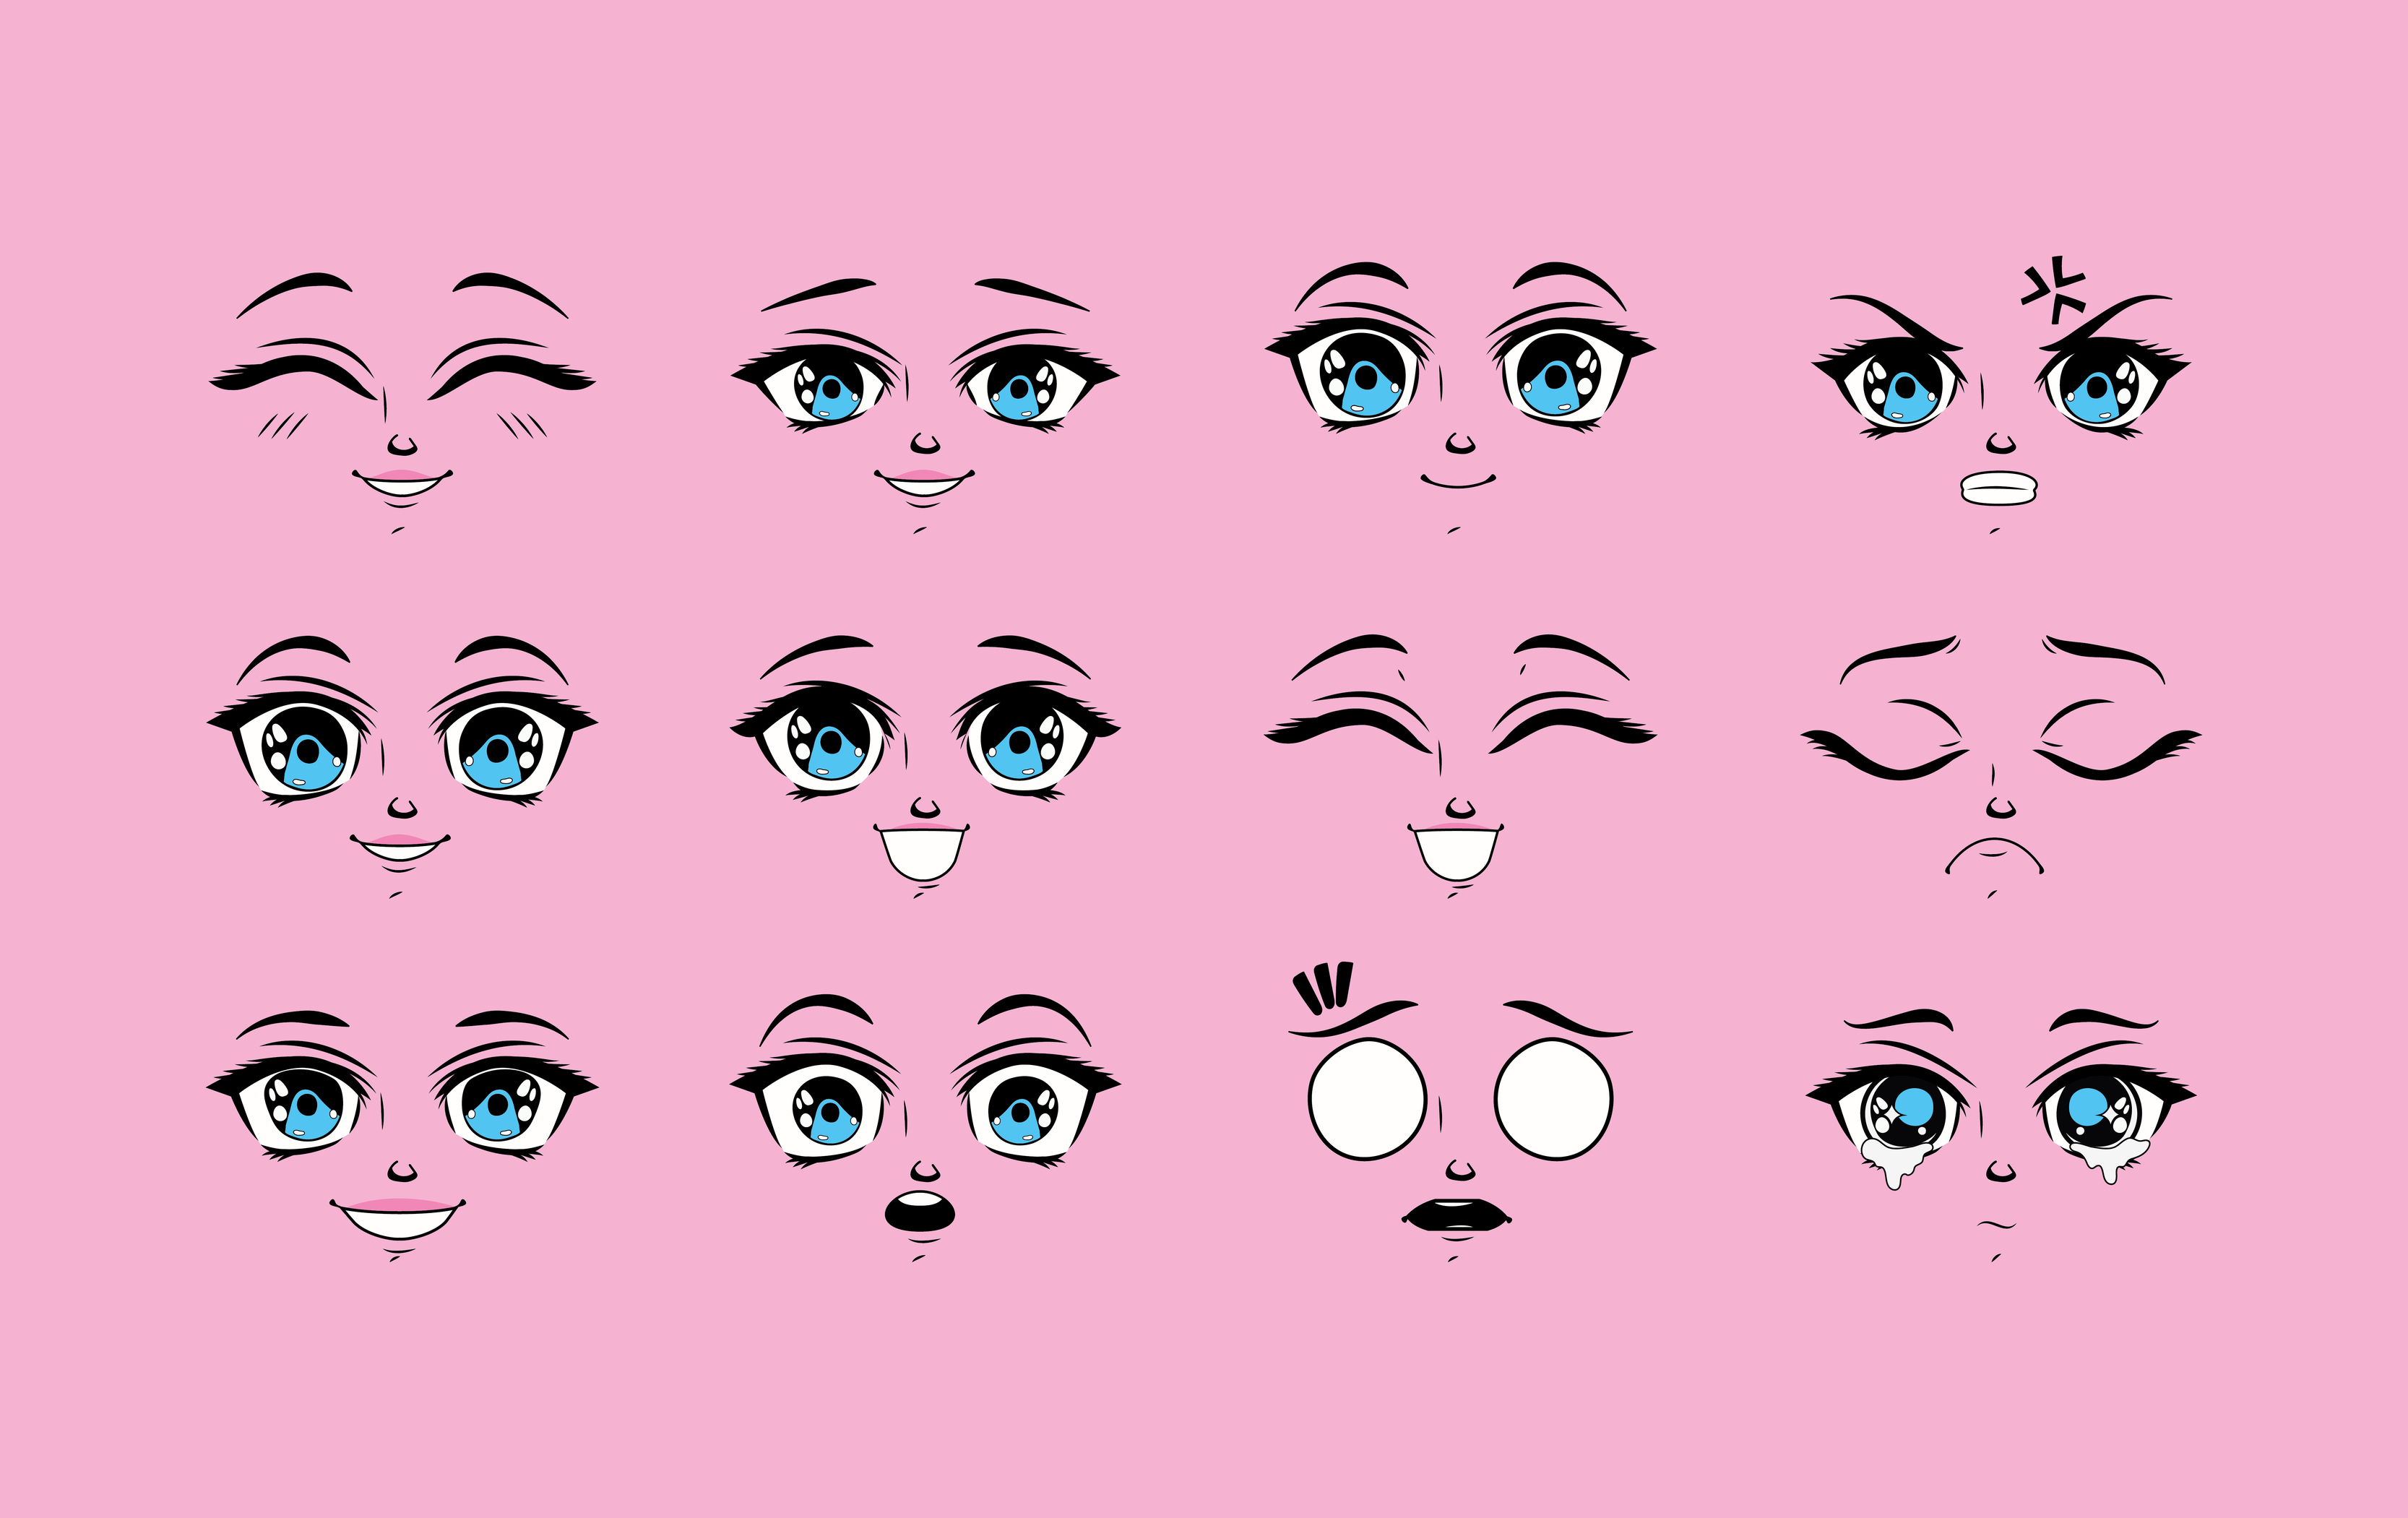 Manga male expression. Man emotions anime faces. Eyes, mouth